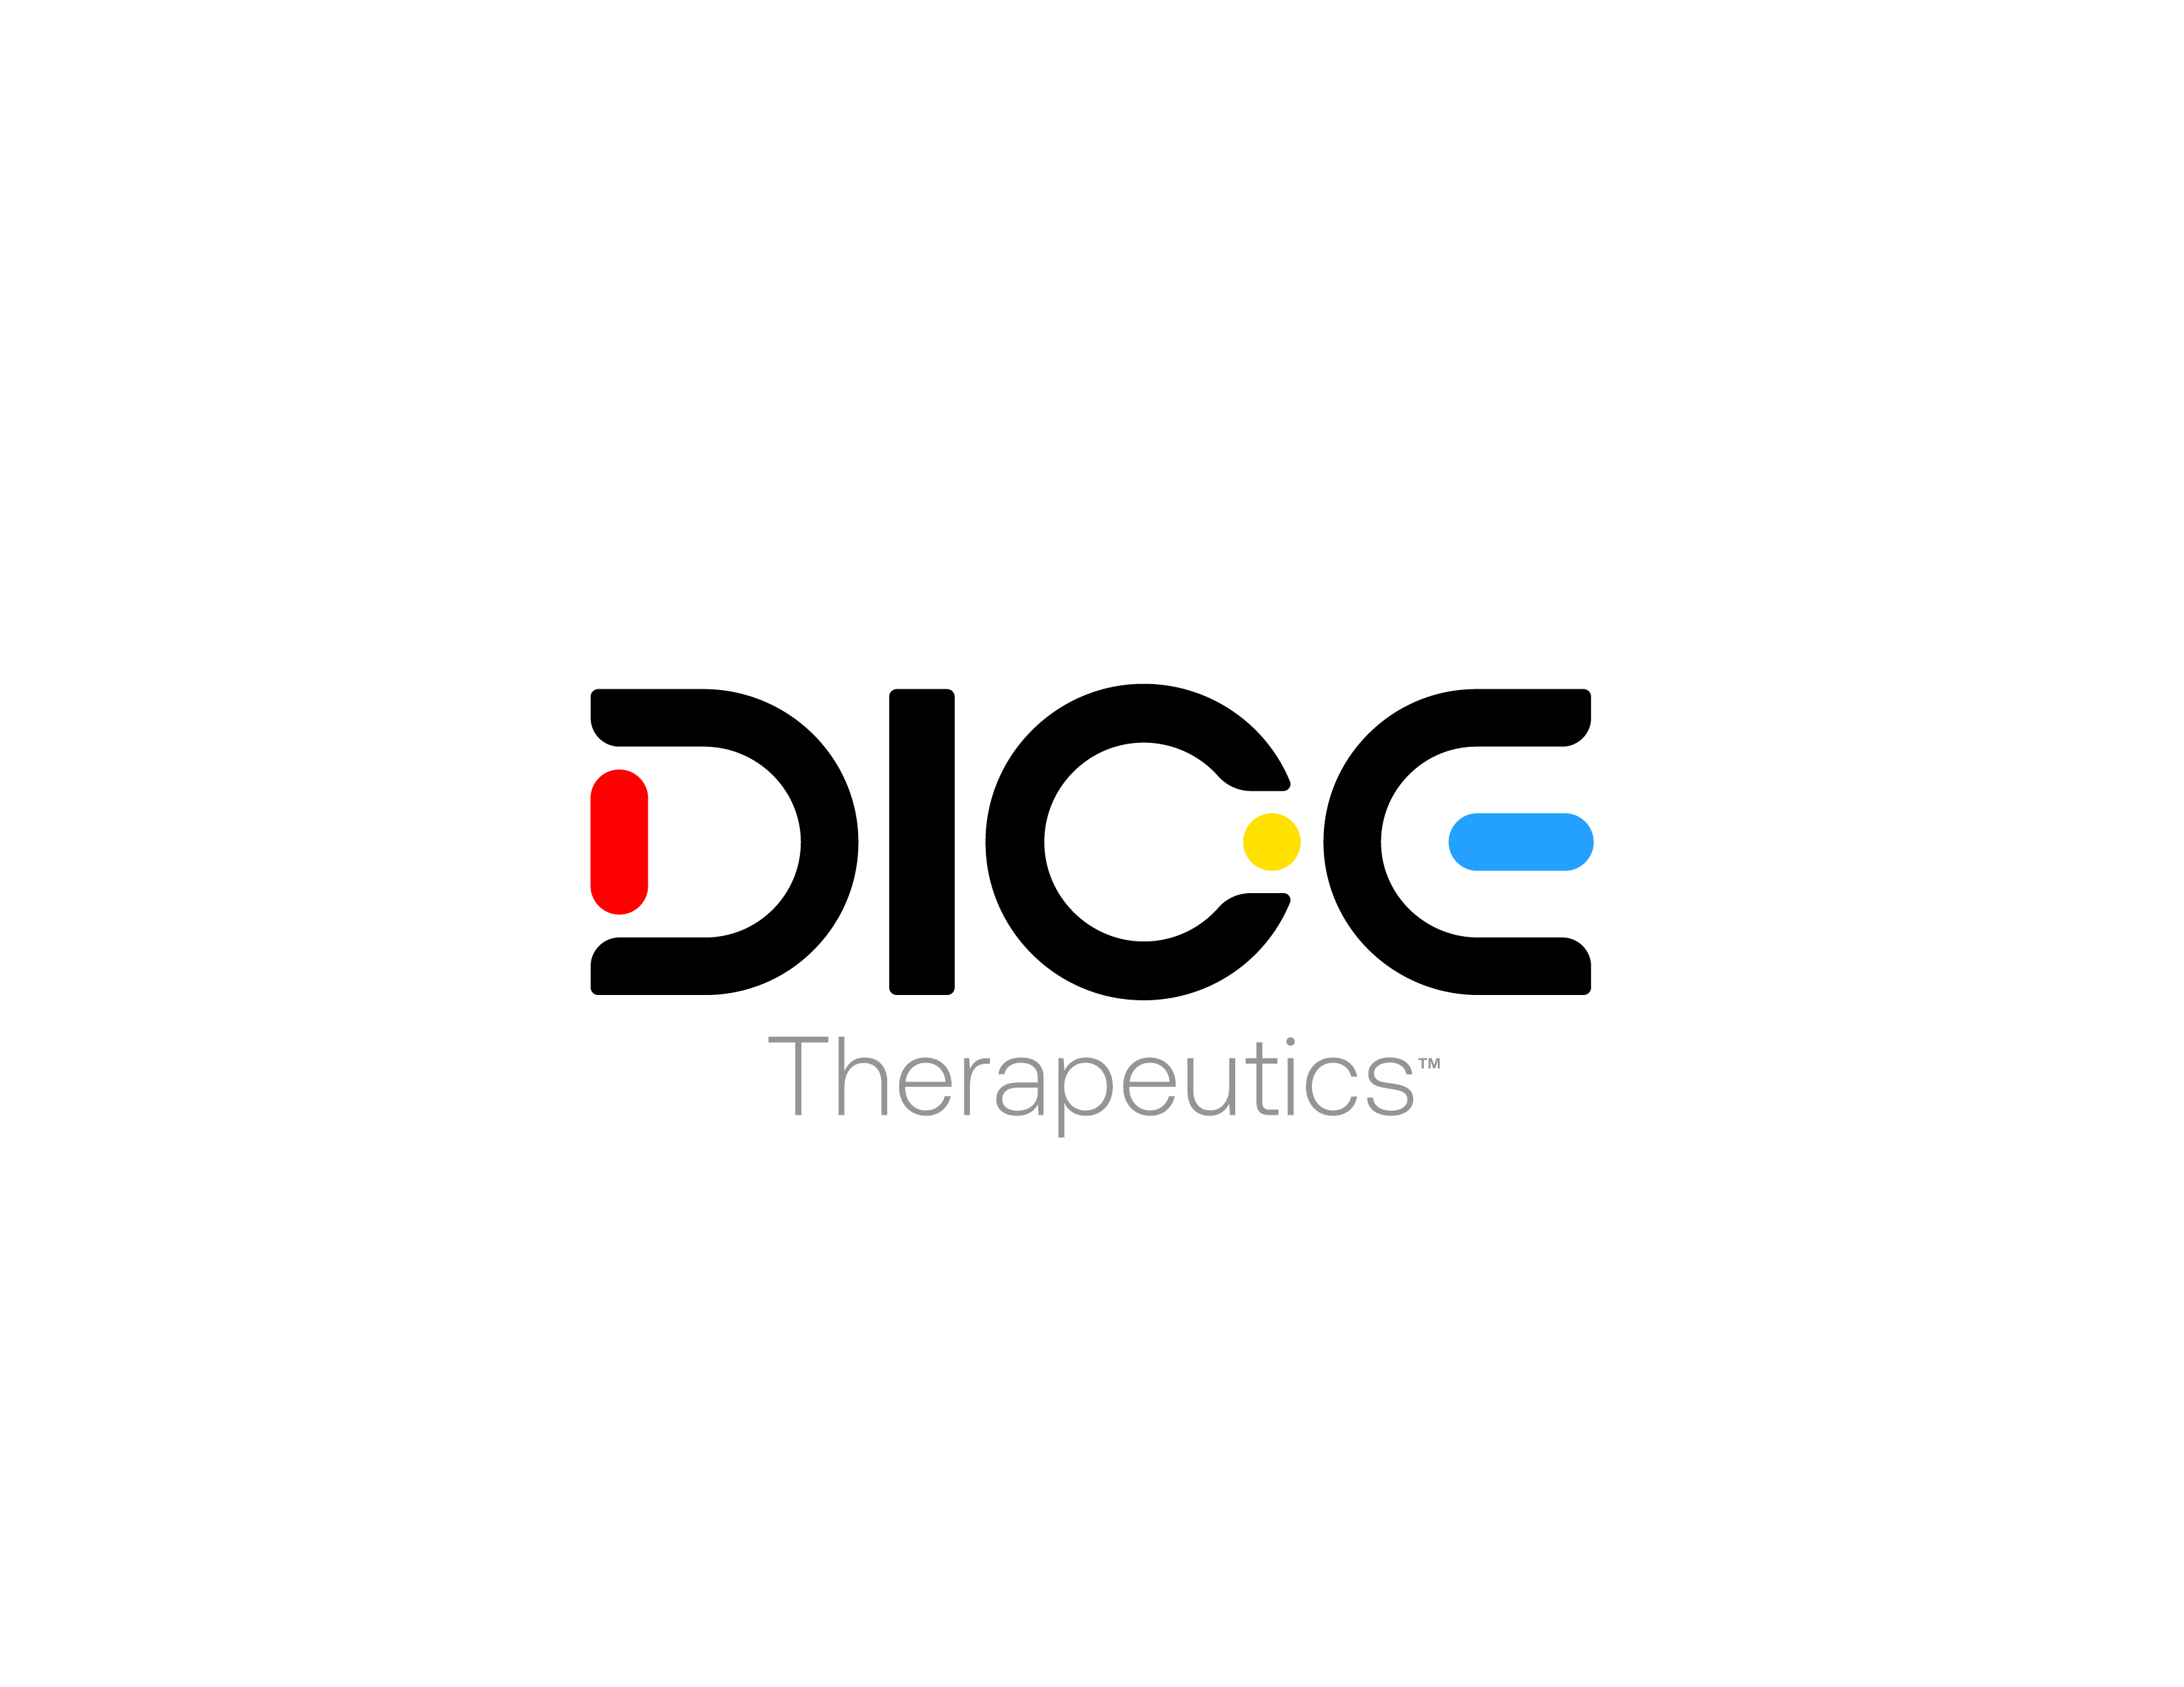 DICE_Therapeutics_Logo-03.png